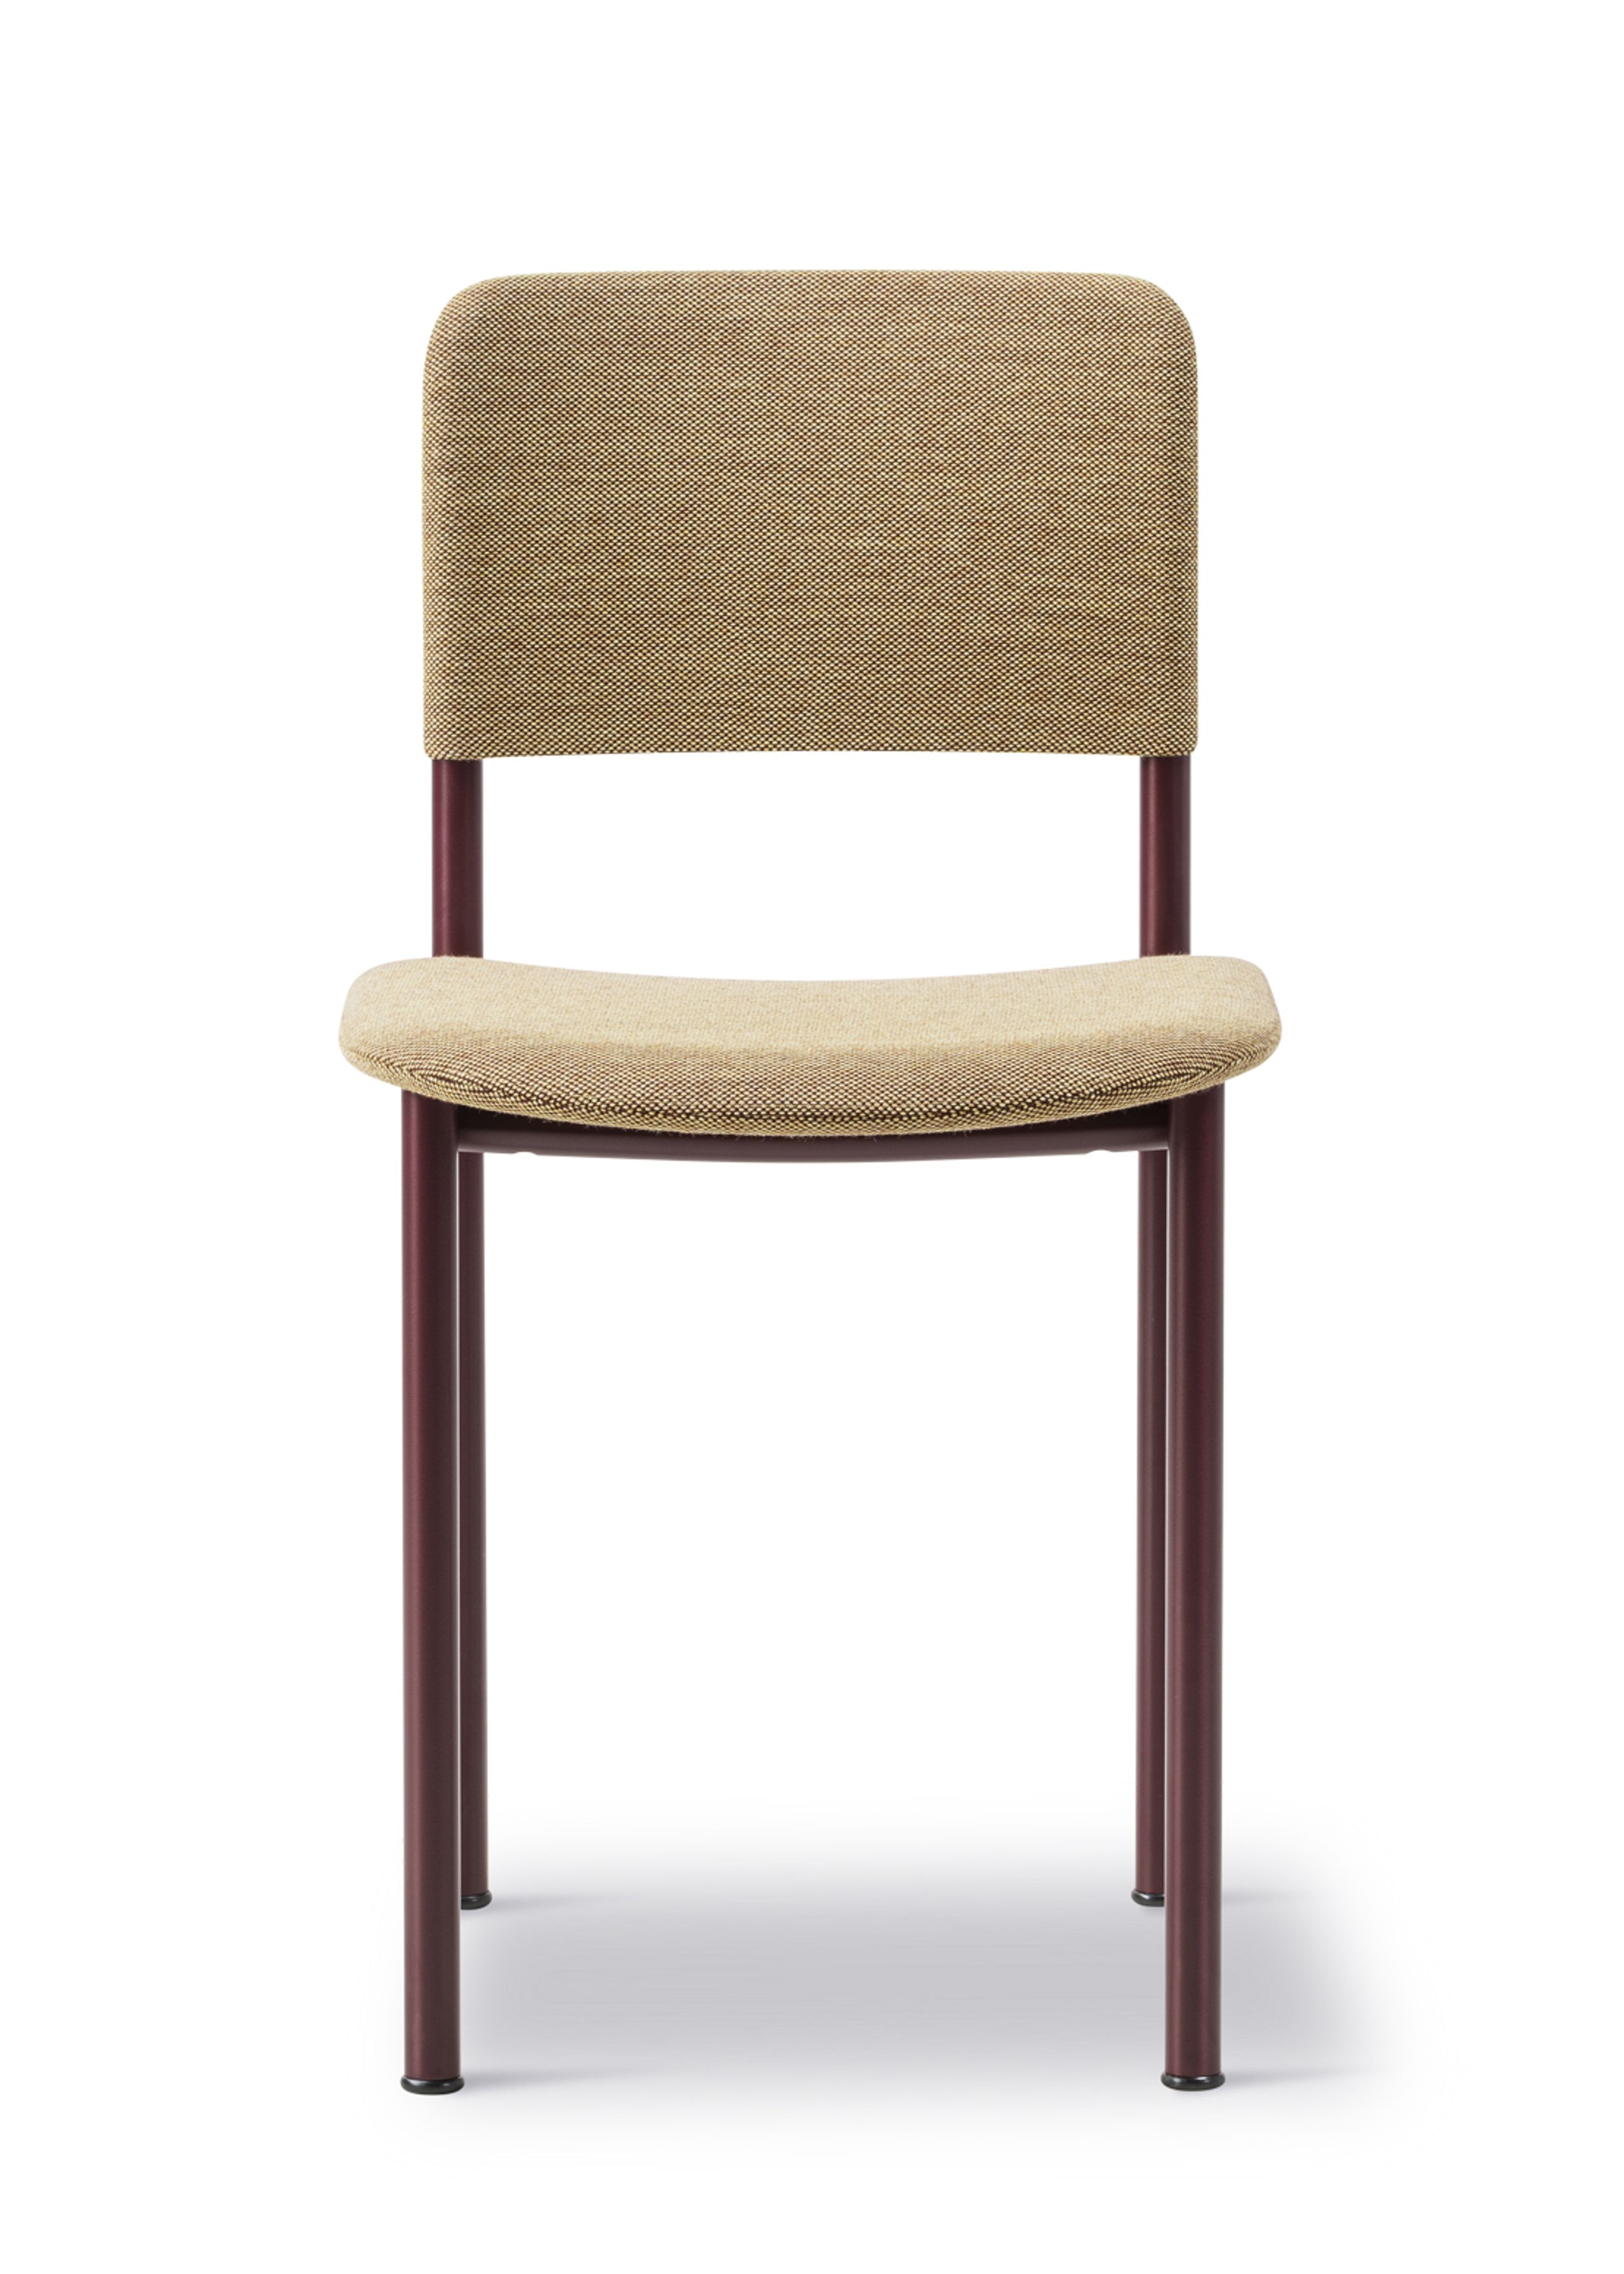 Chair 3414 Edward Barber & Jay Osgerby - Spisebordsstol Fredericia Furniture